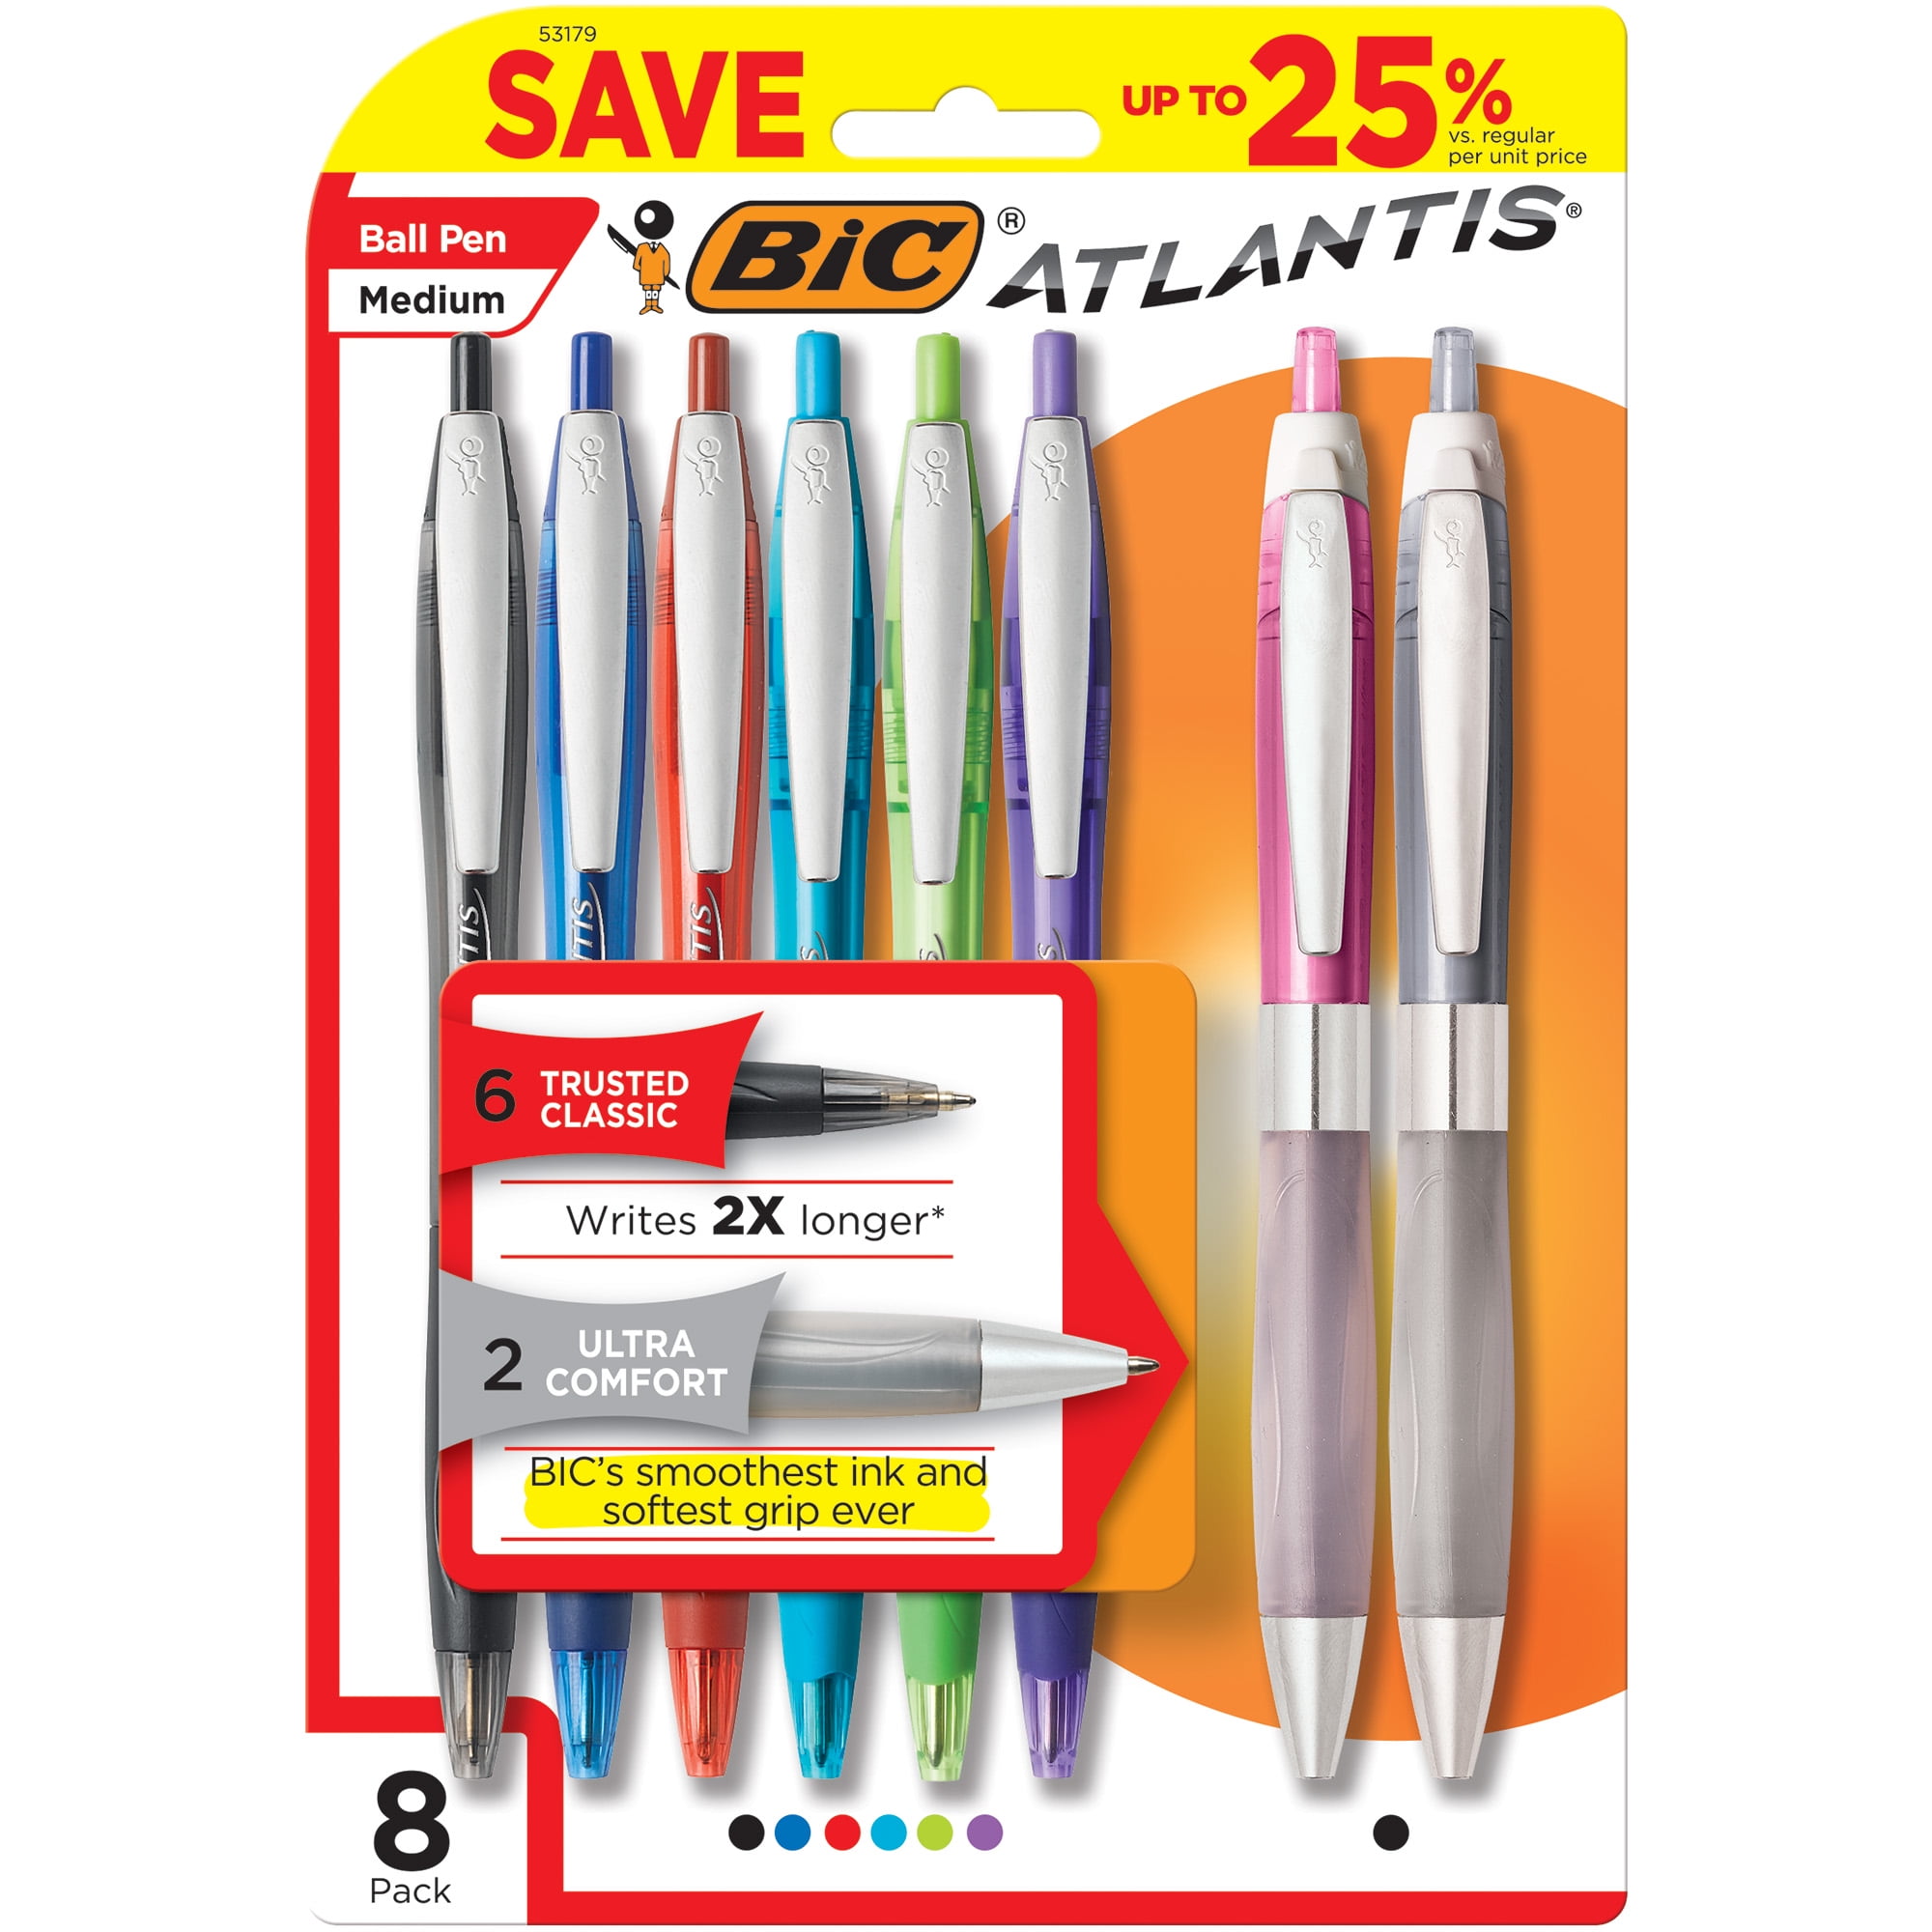 BIC Atlantis Trusted Classic Retractable Medium Ball Pen Writes 2X Longer NEW 